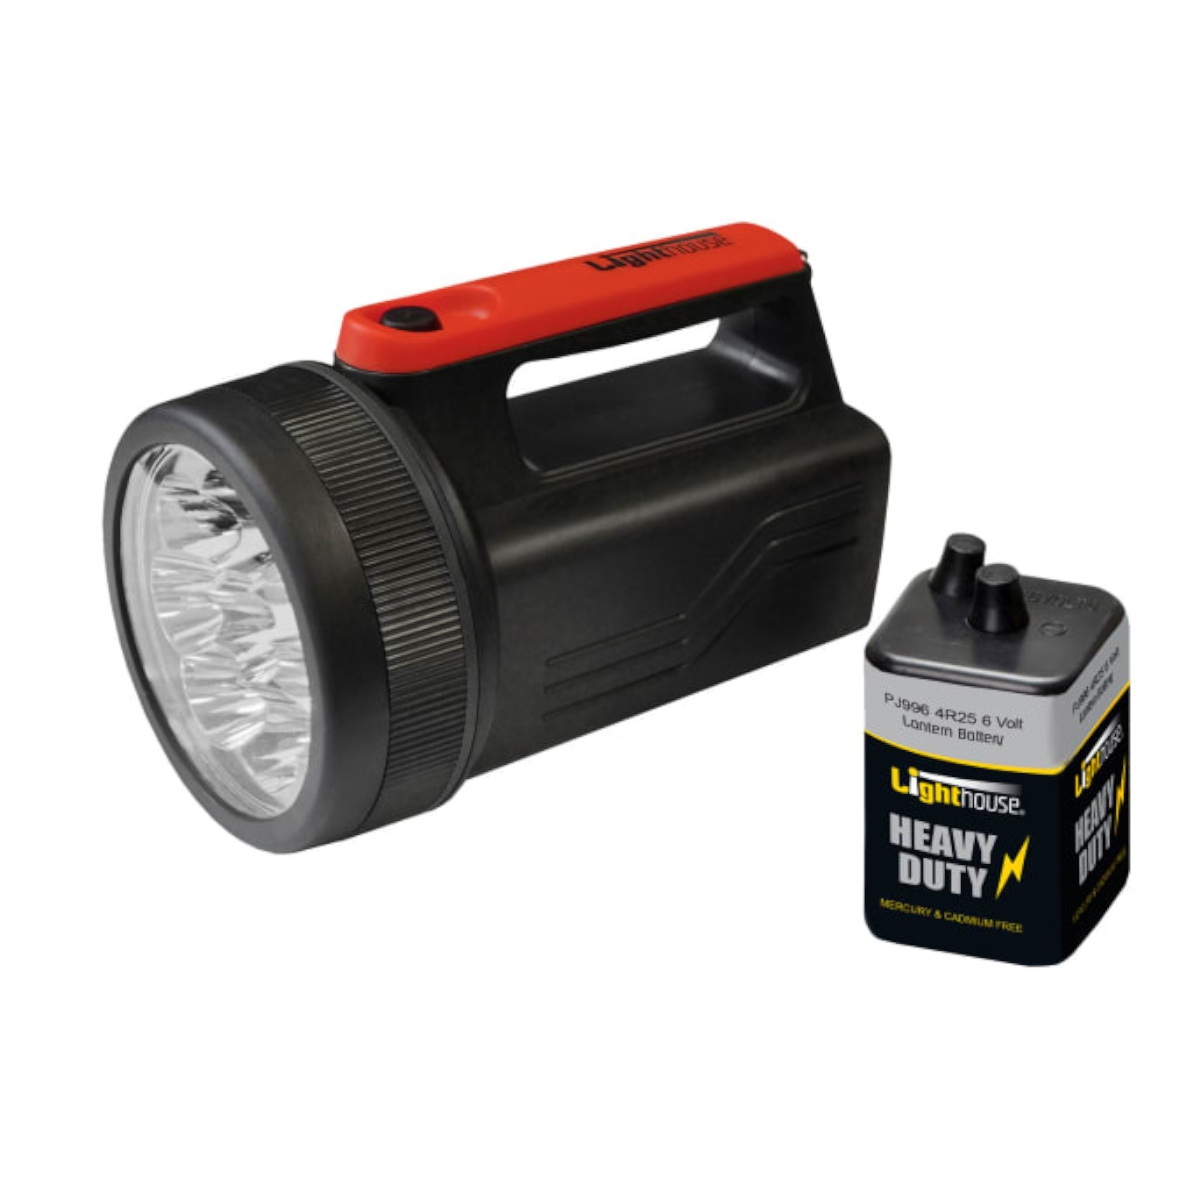 Apature led Light Battery Compact. Coast Dual Battery Lantern. Фонарь v70. POWERCUT Light l71.